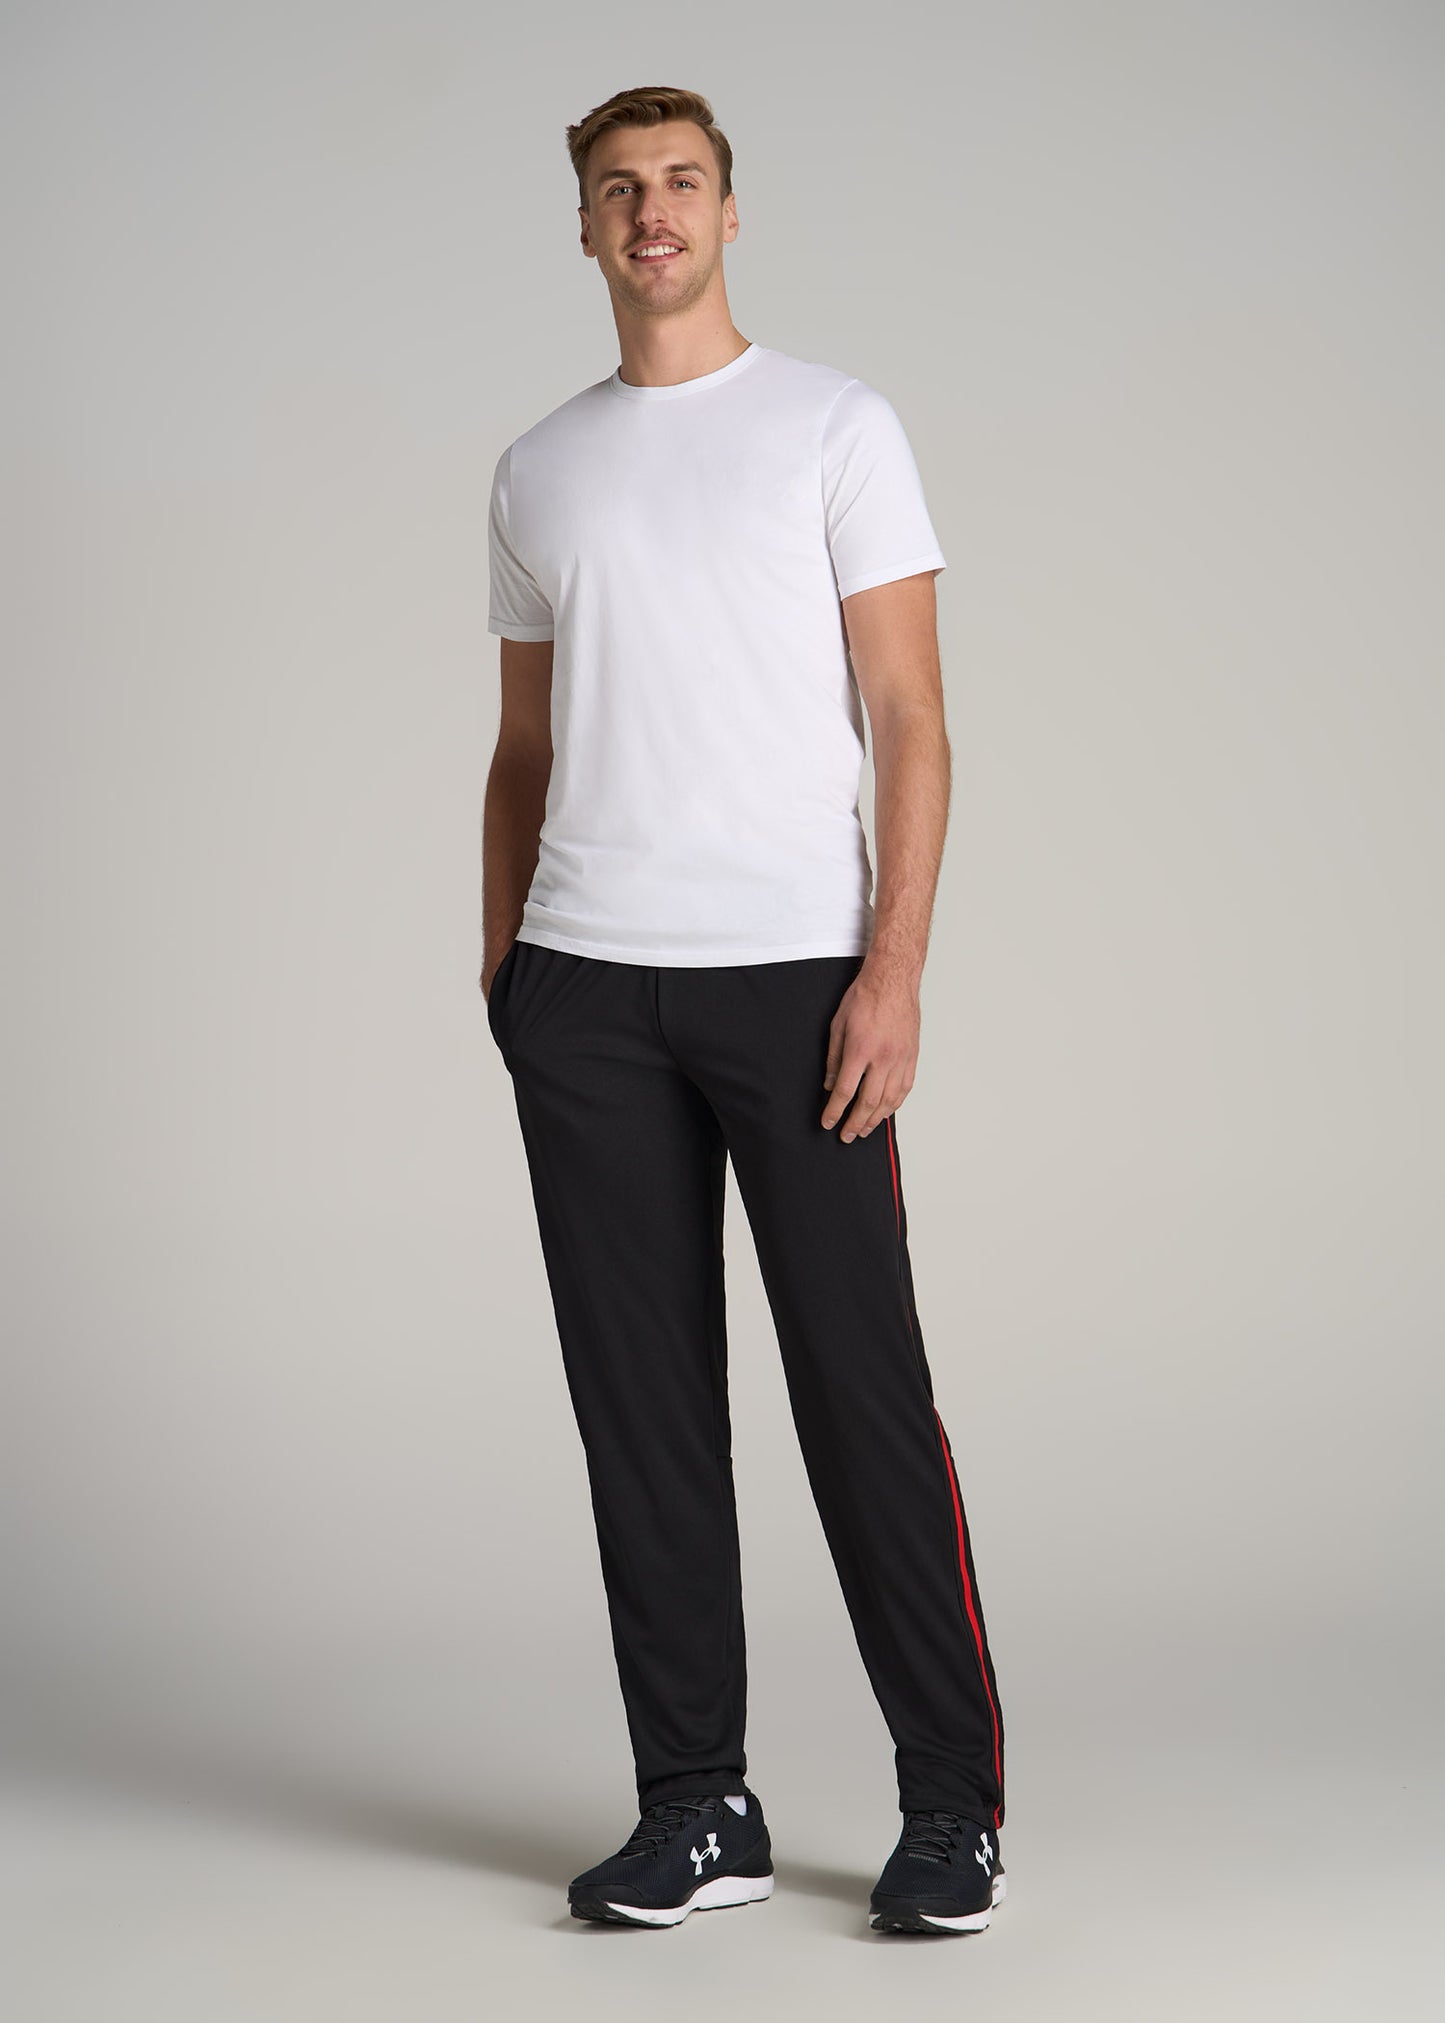 Athletic Stripe Pants for Tall Men in Black-Red Stripe